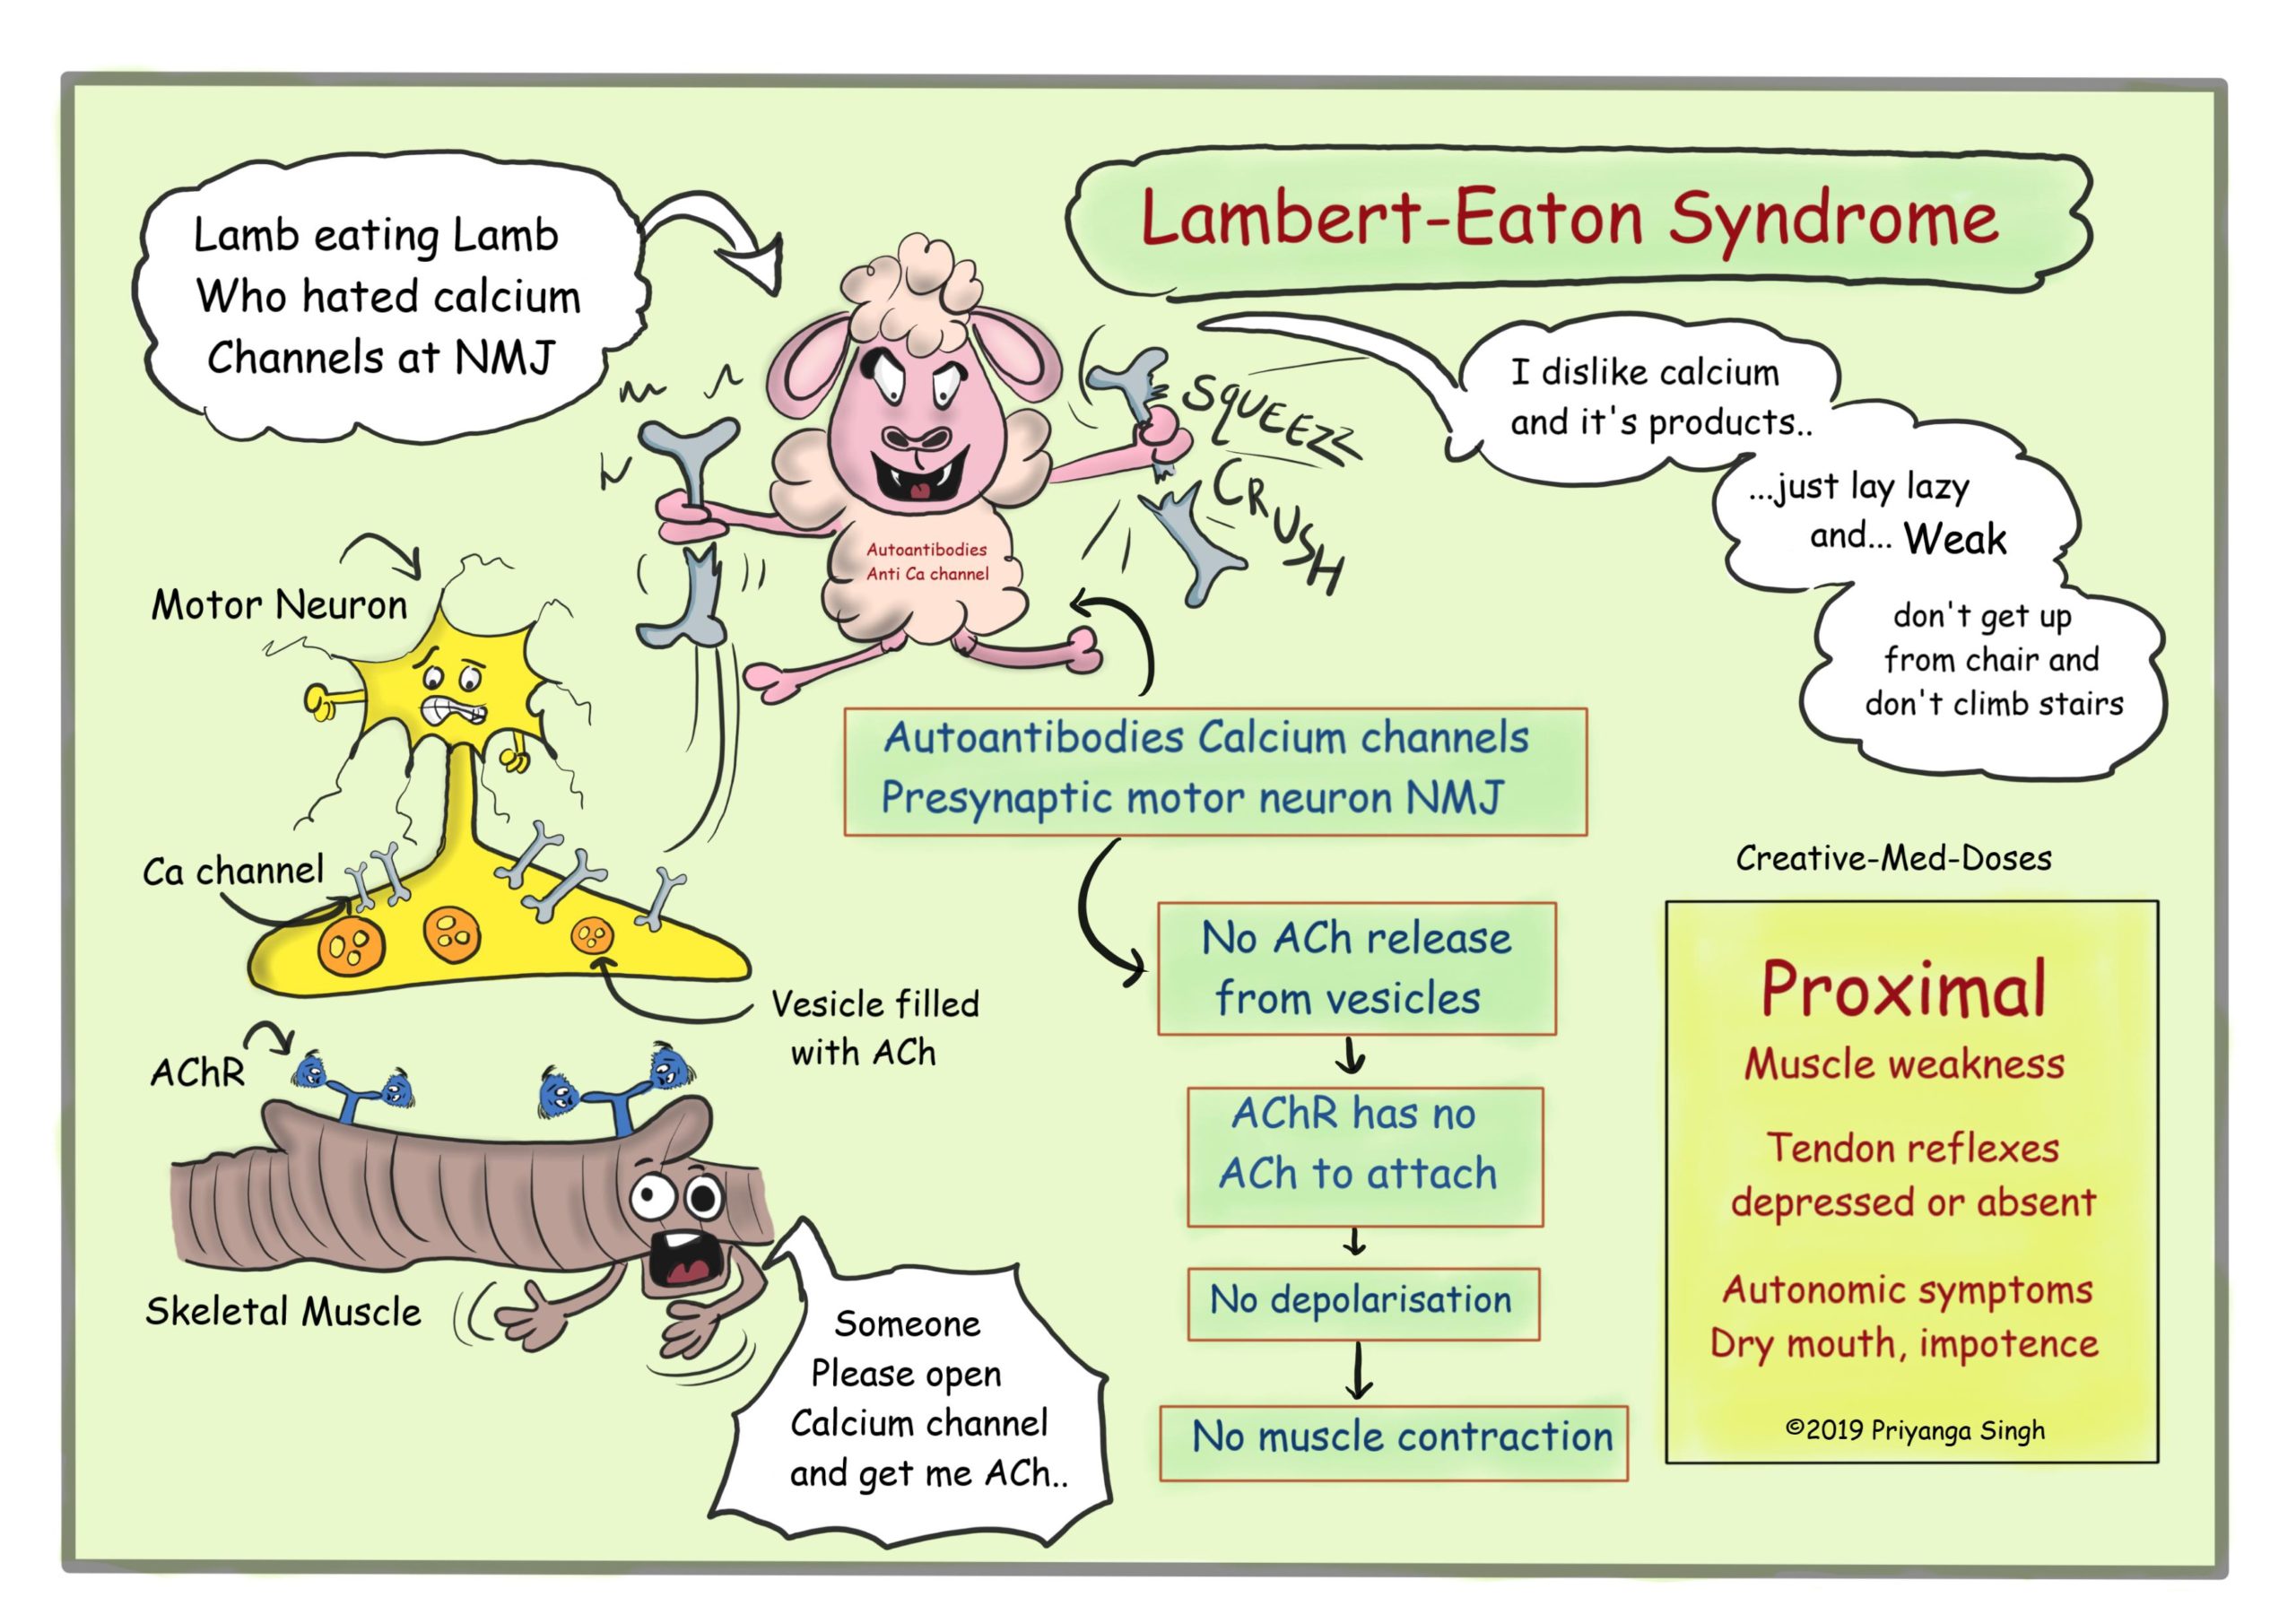 Lambert-Eaton syndrome: Pathogenesis 